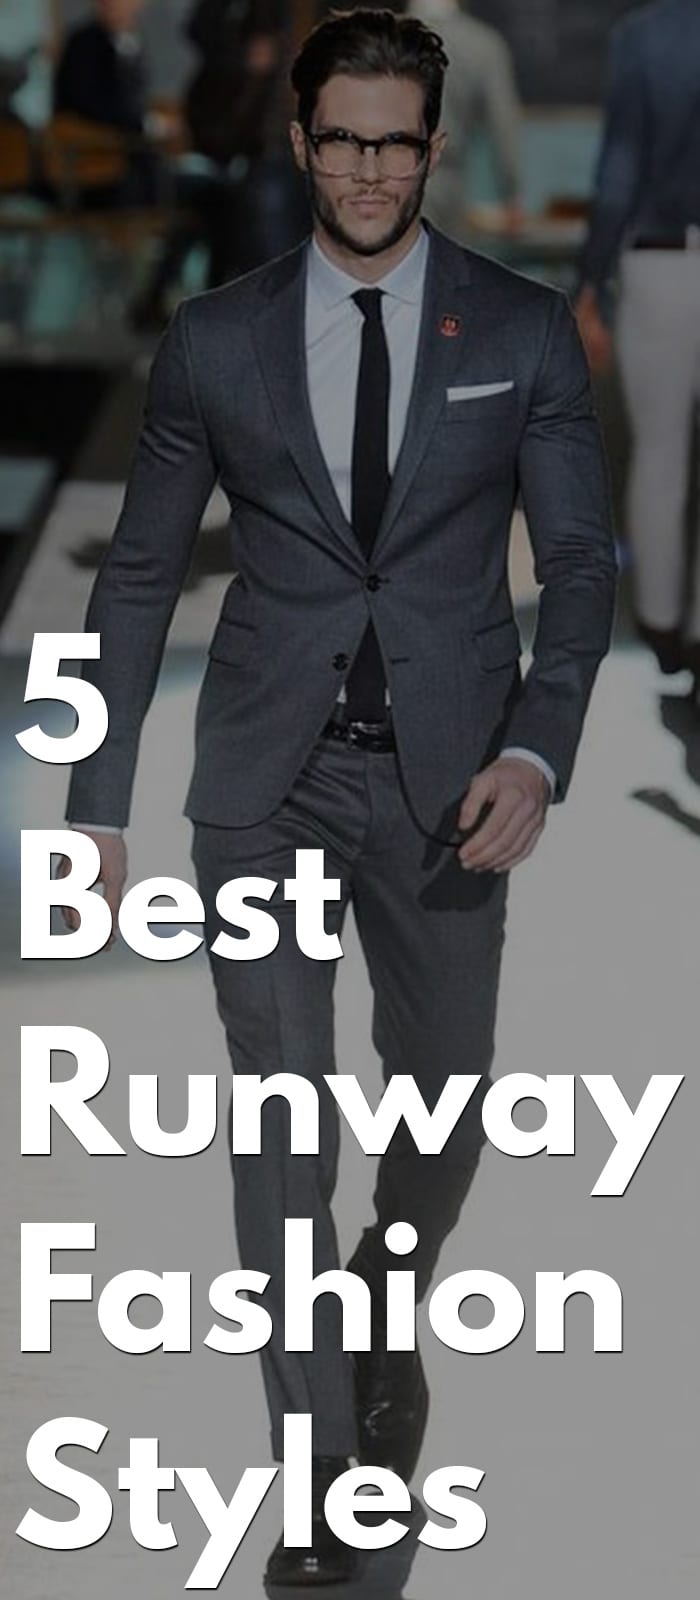 5 Best Runway Fashion Styles